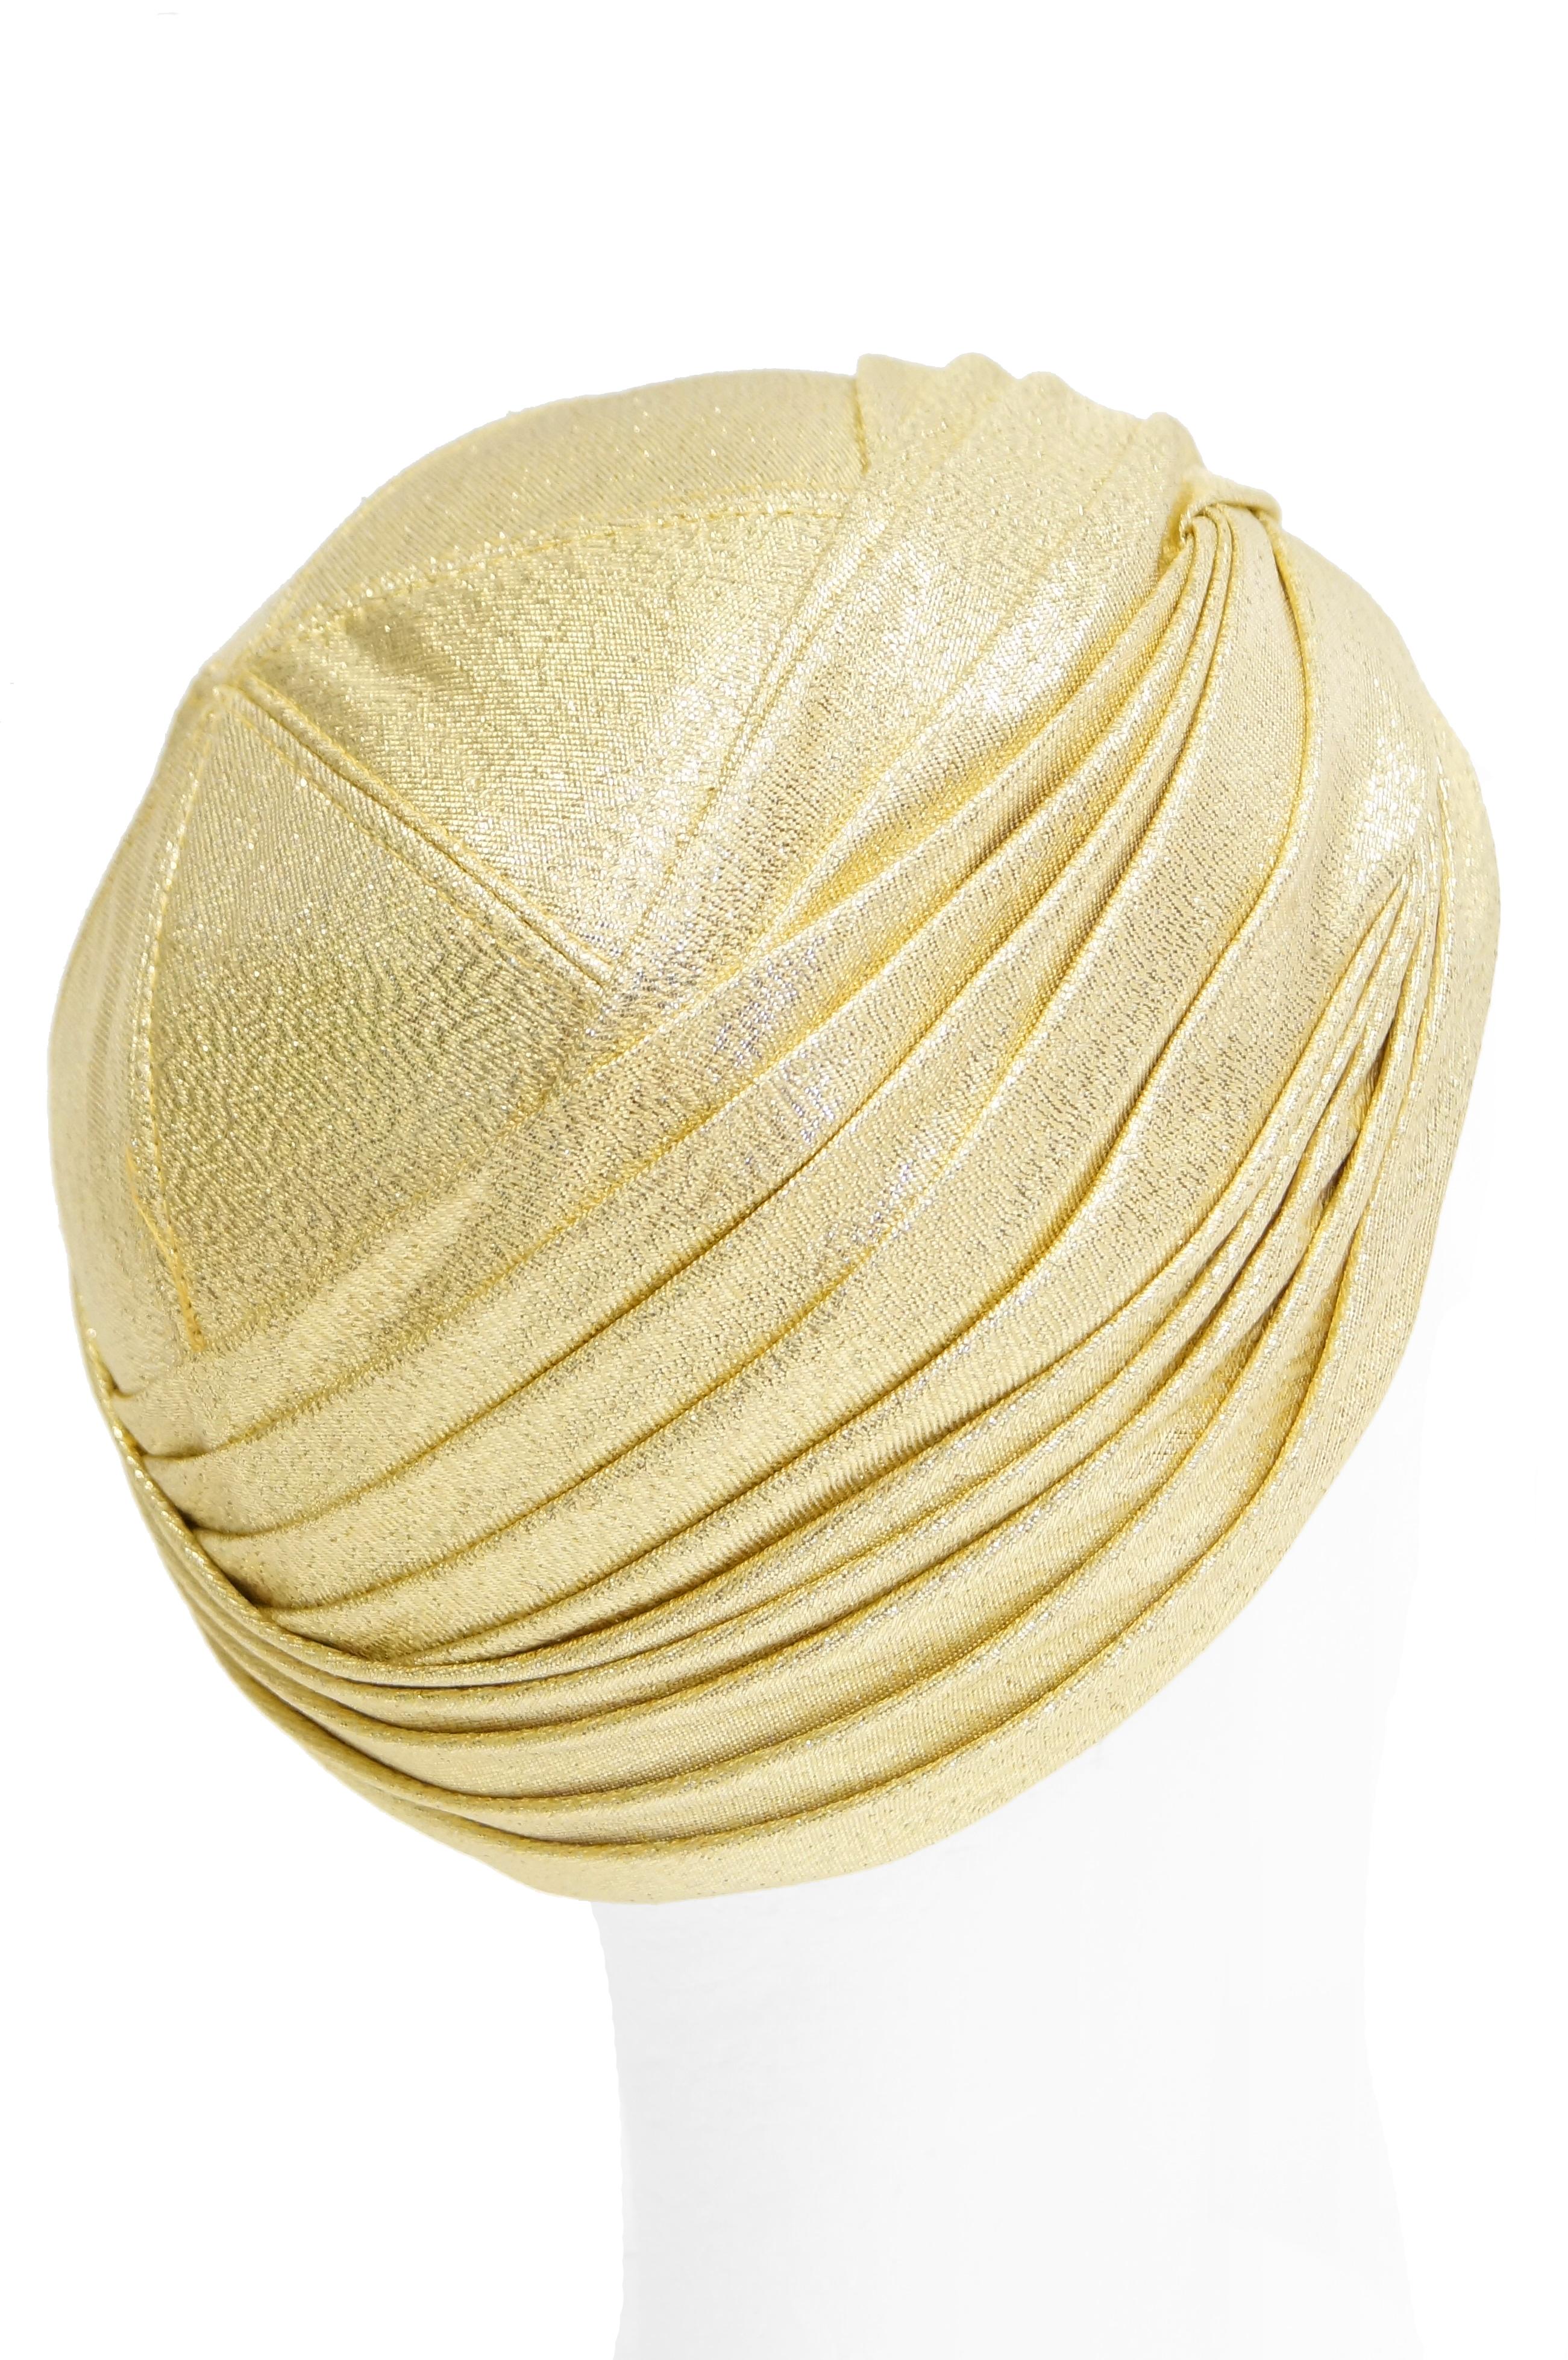 Pierre Cardin Gold Metallic Turban, 1950s  1